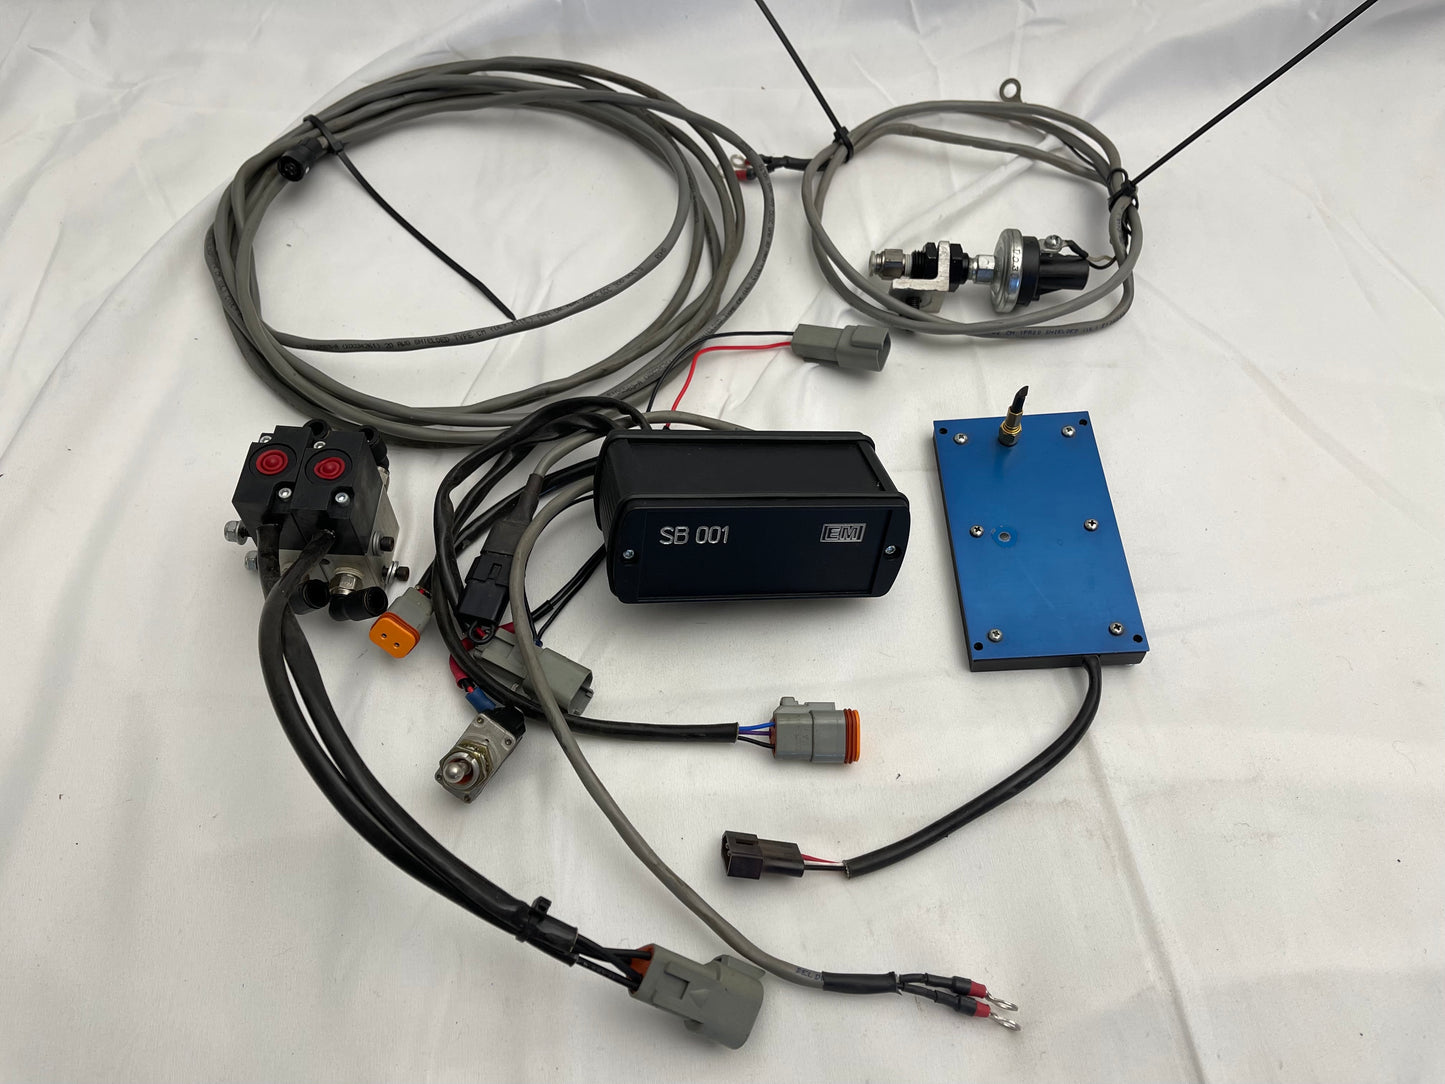 A-Fuel Safety Shutoff Controller (SB001) and RF Shutdown Device